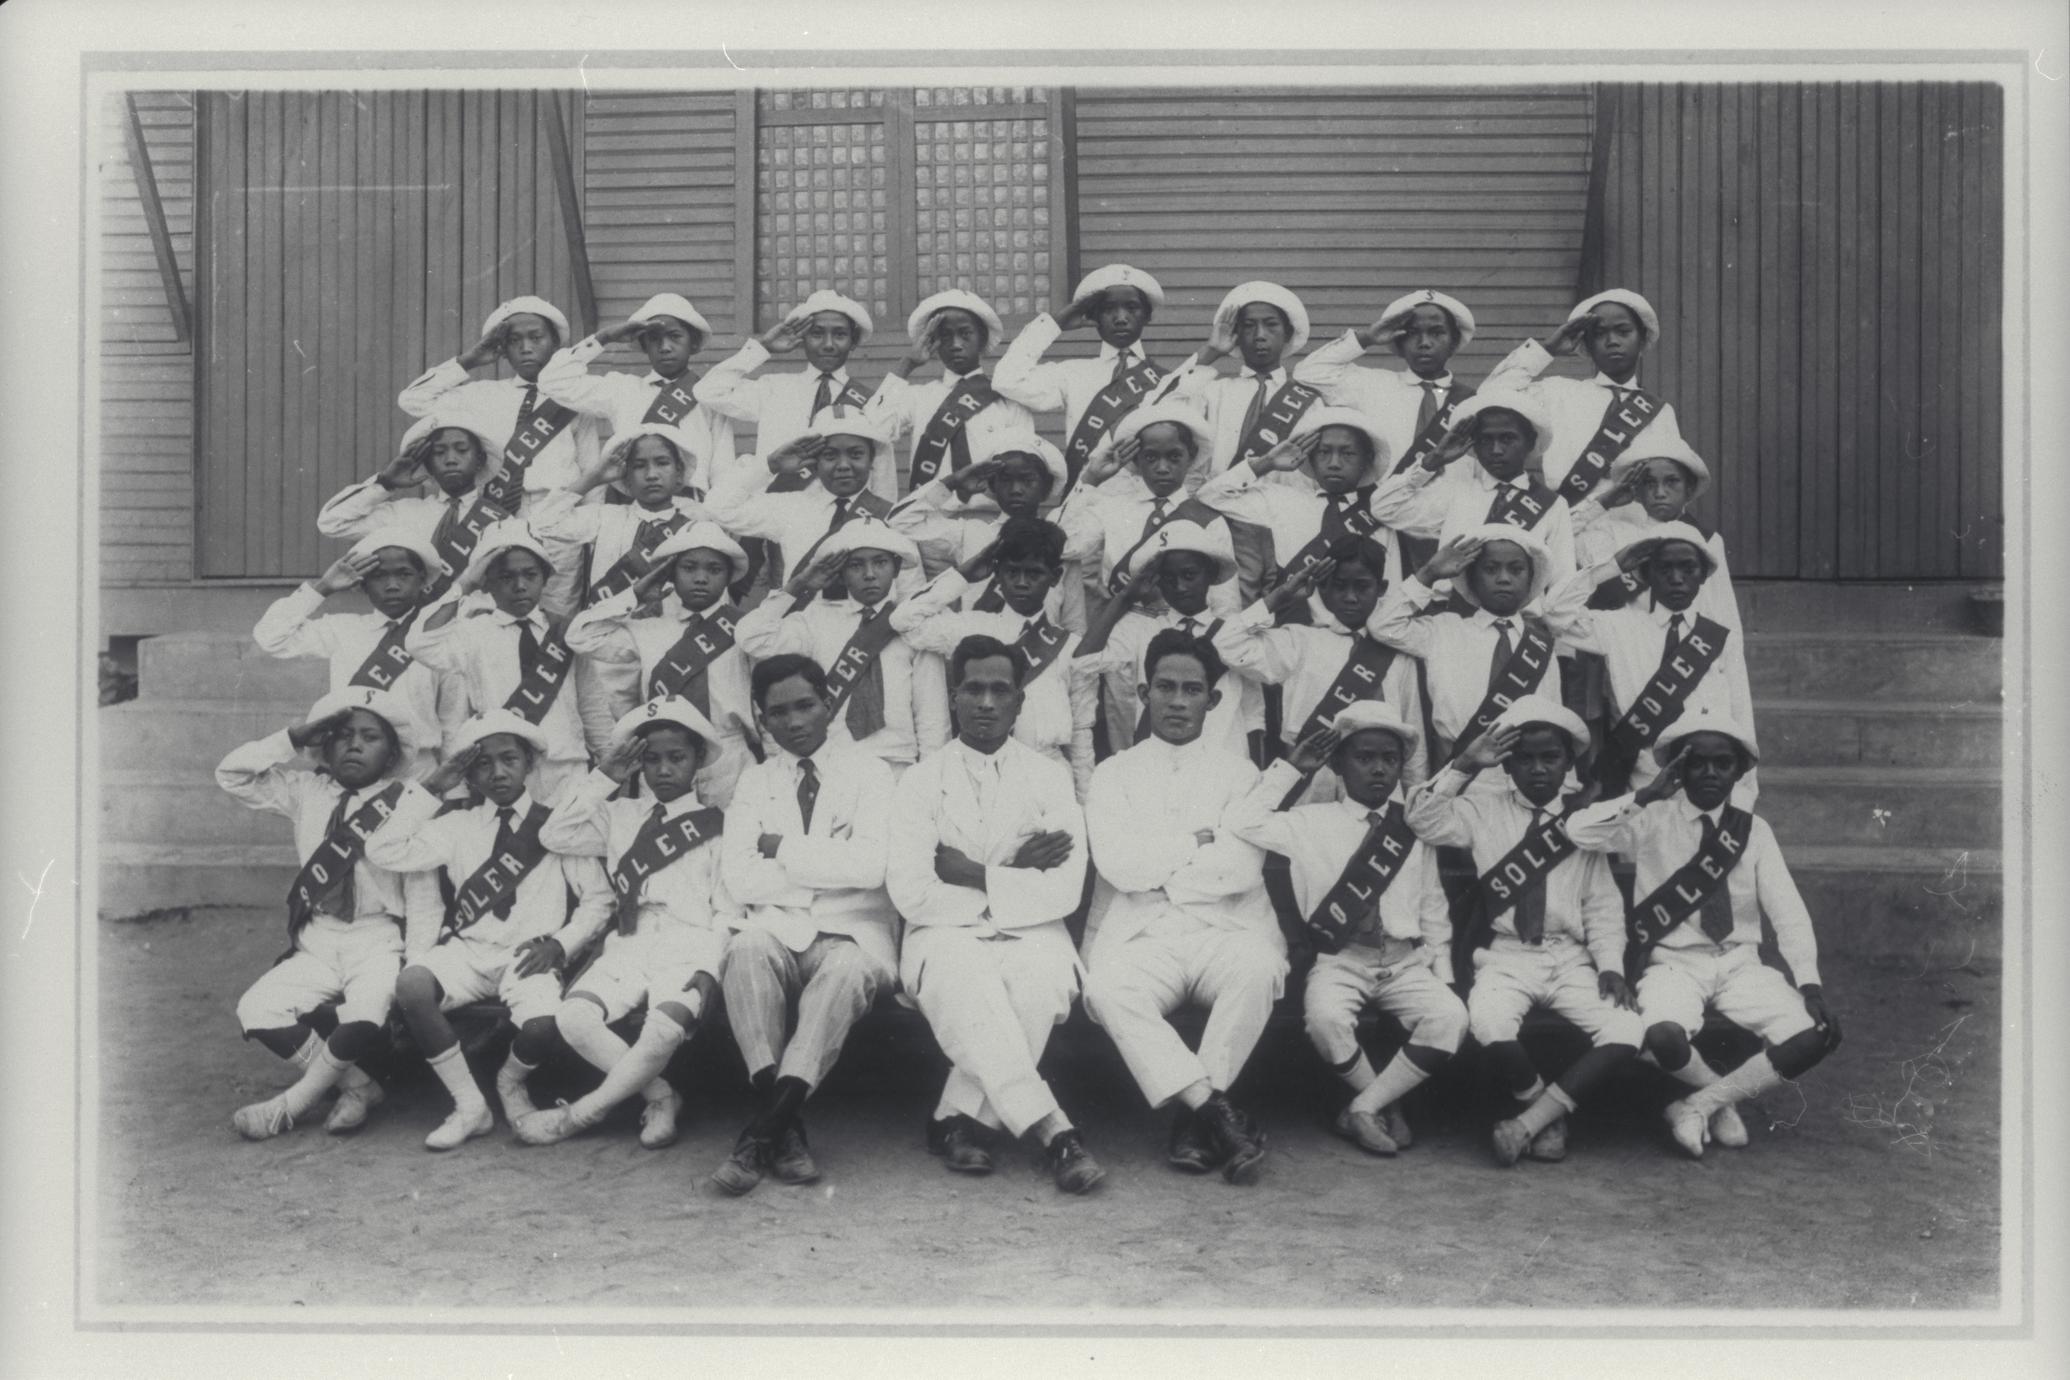 The Soler track team, 1900-1910